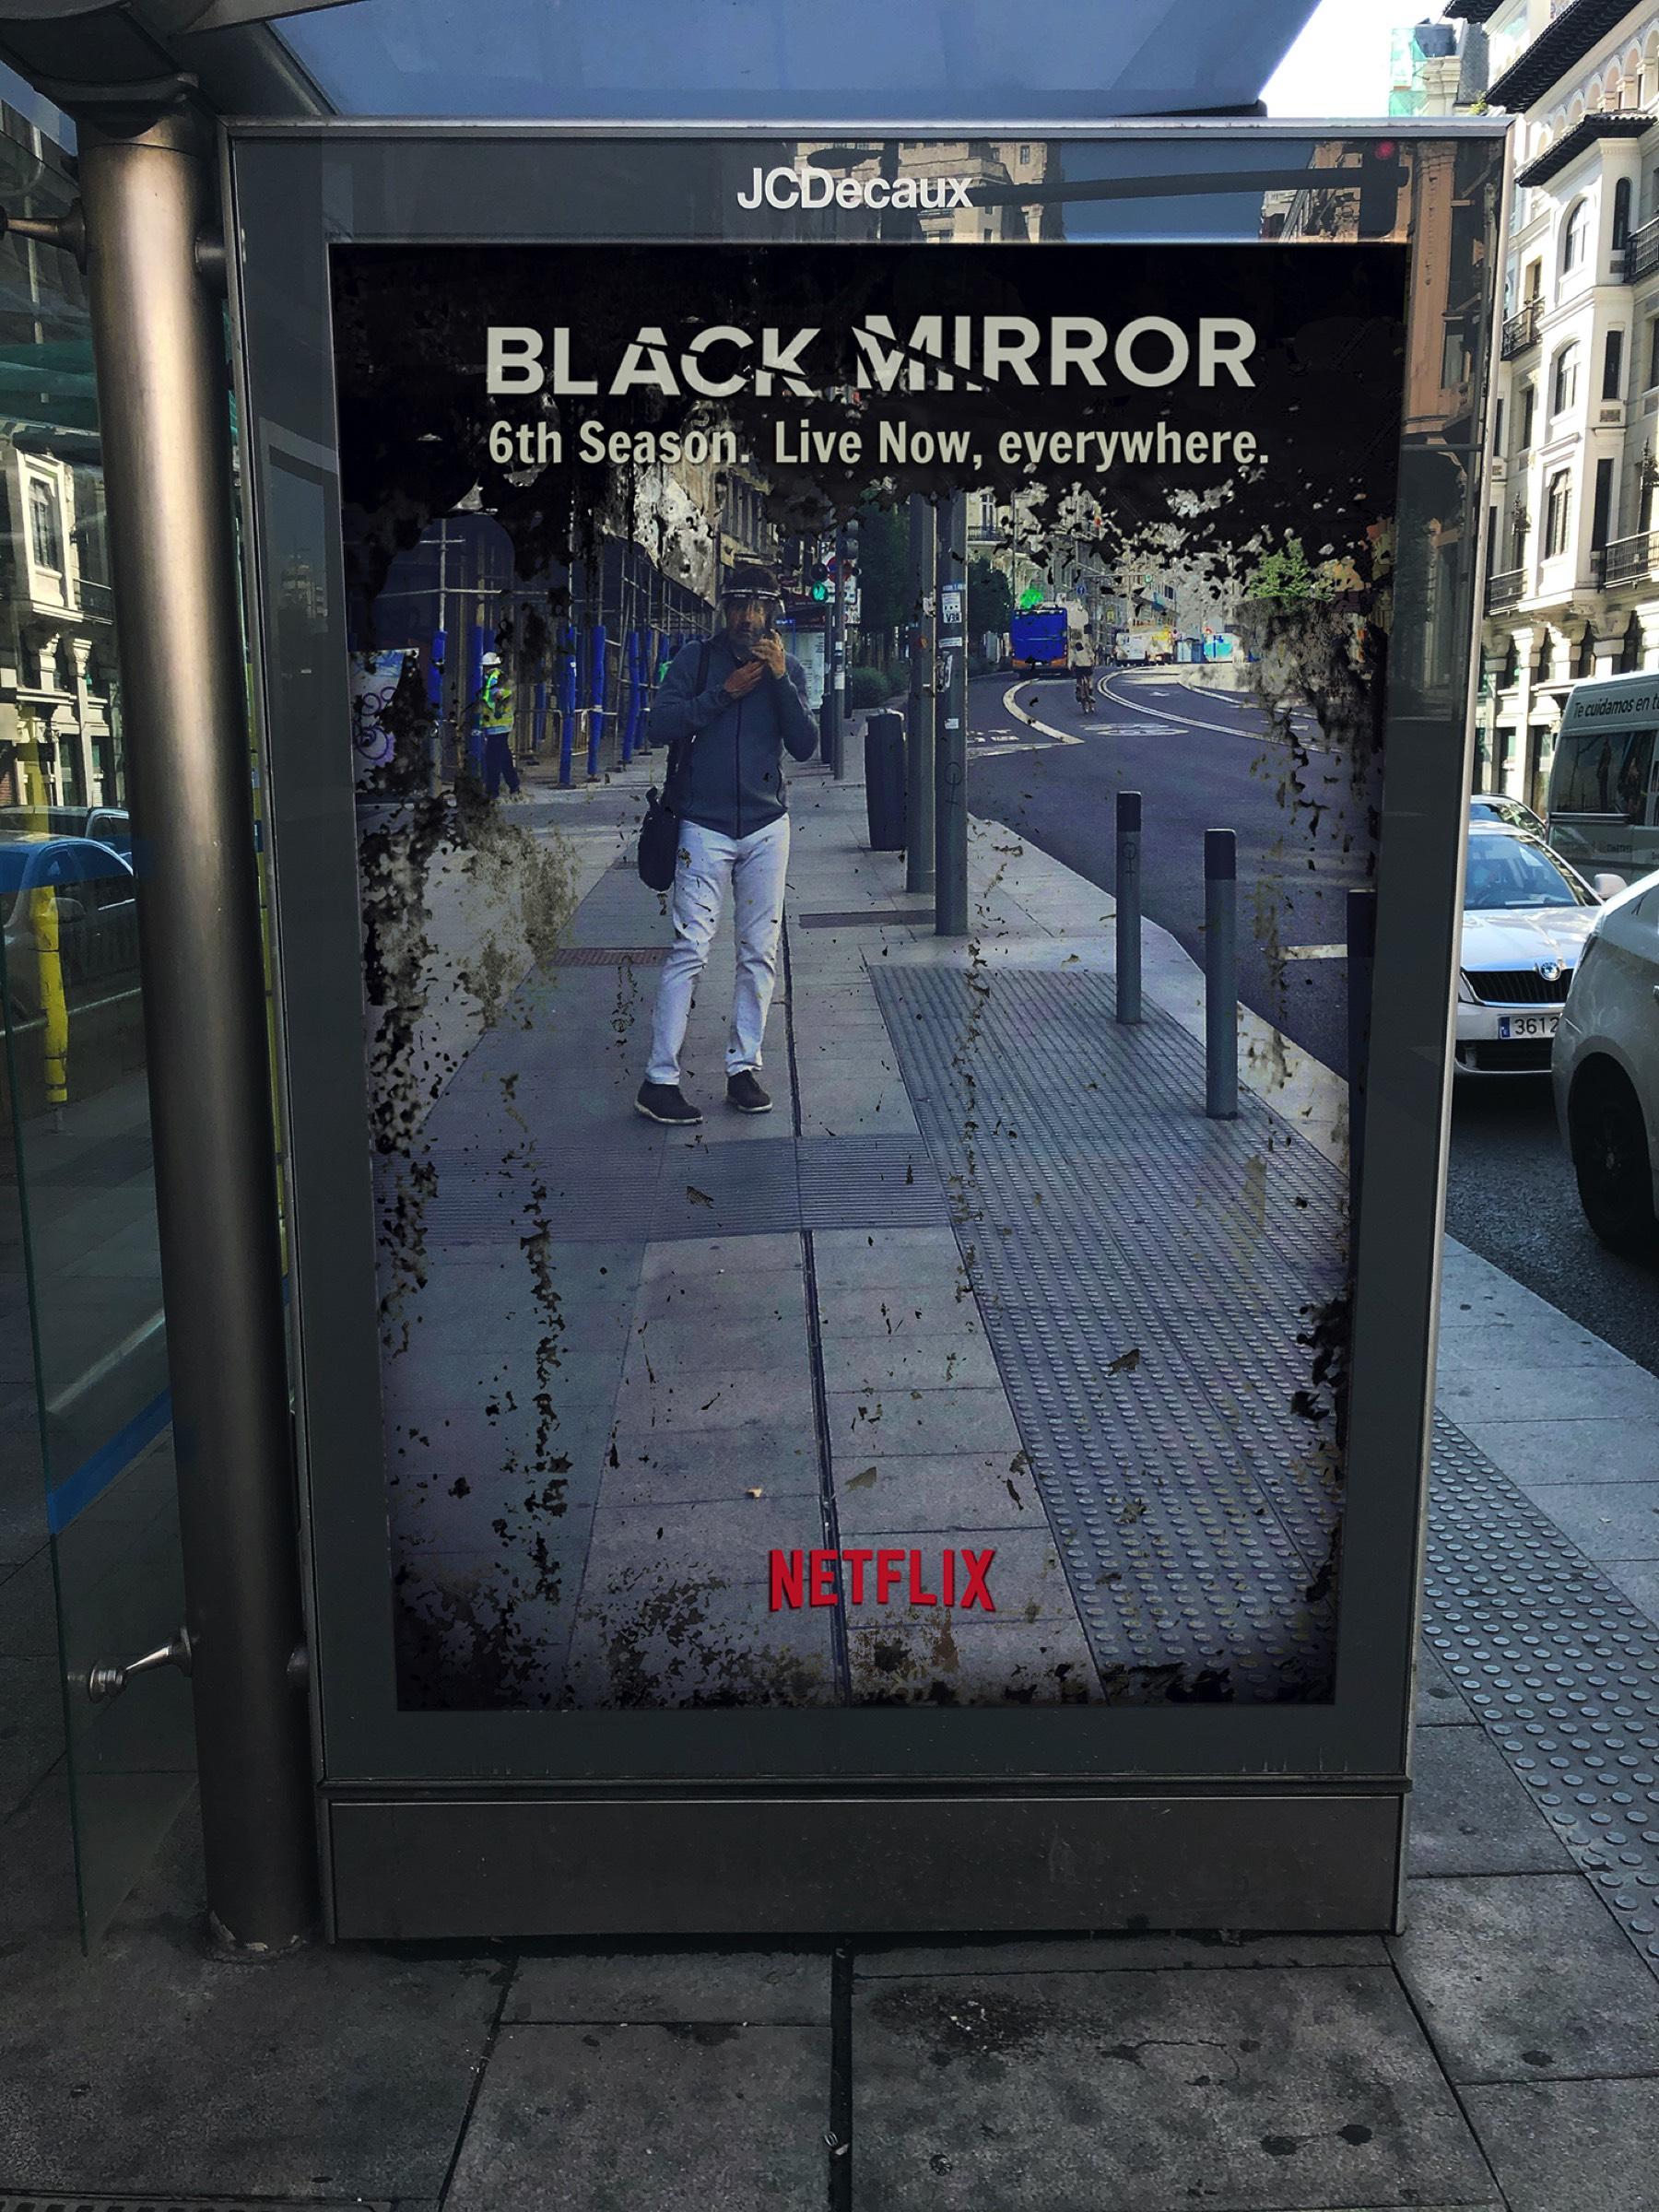 Netflix-Black Mirror-AdsOfTheWorld-01